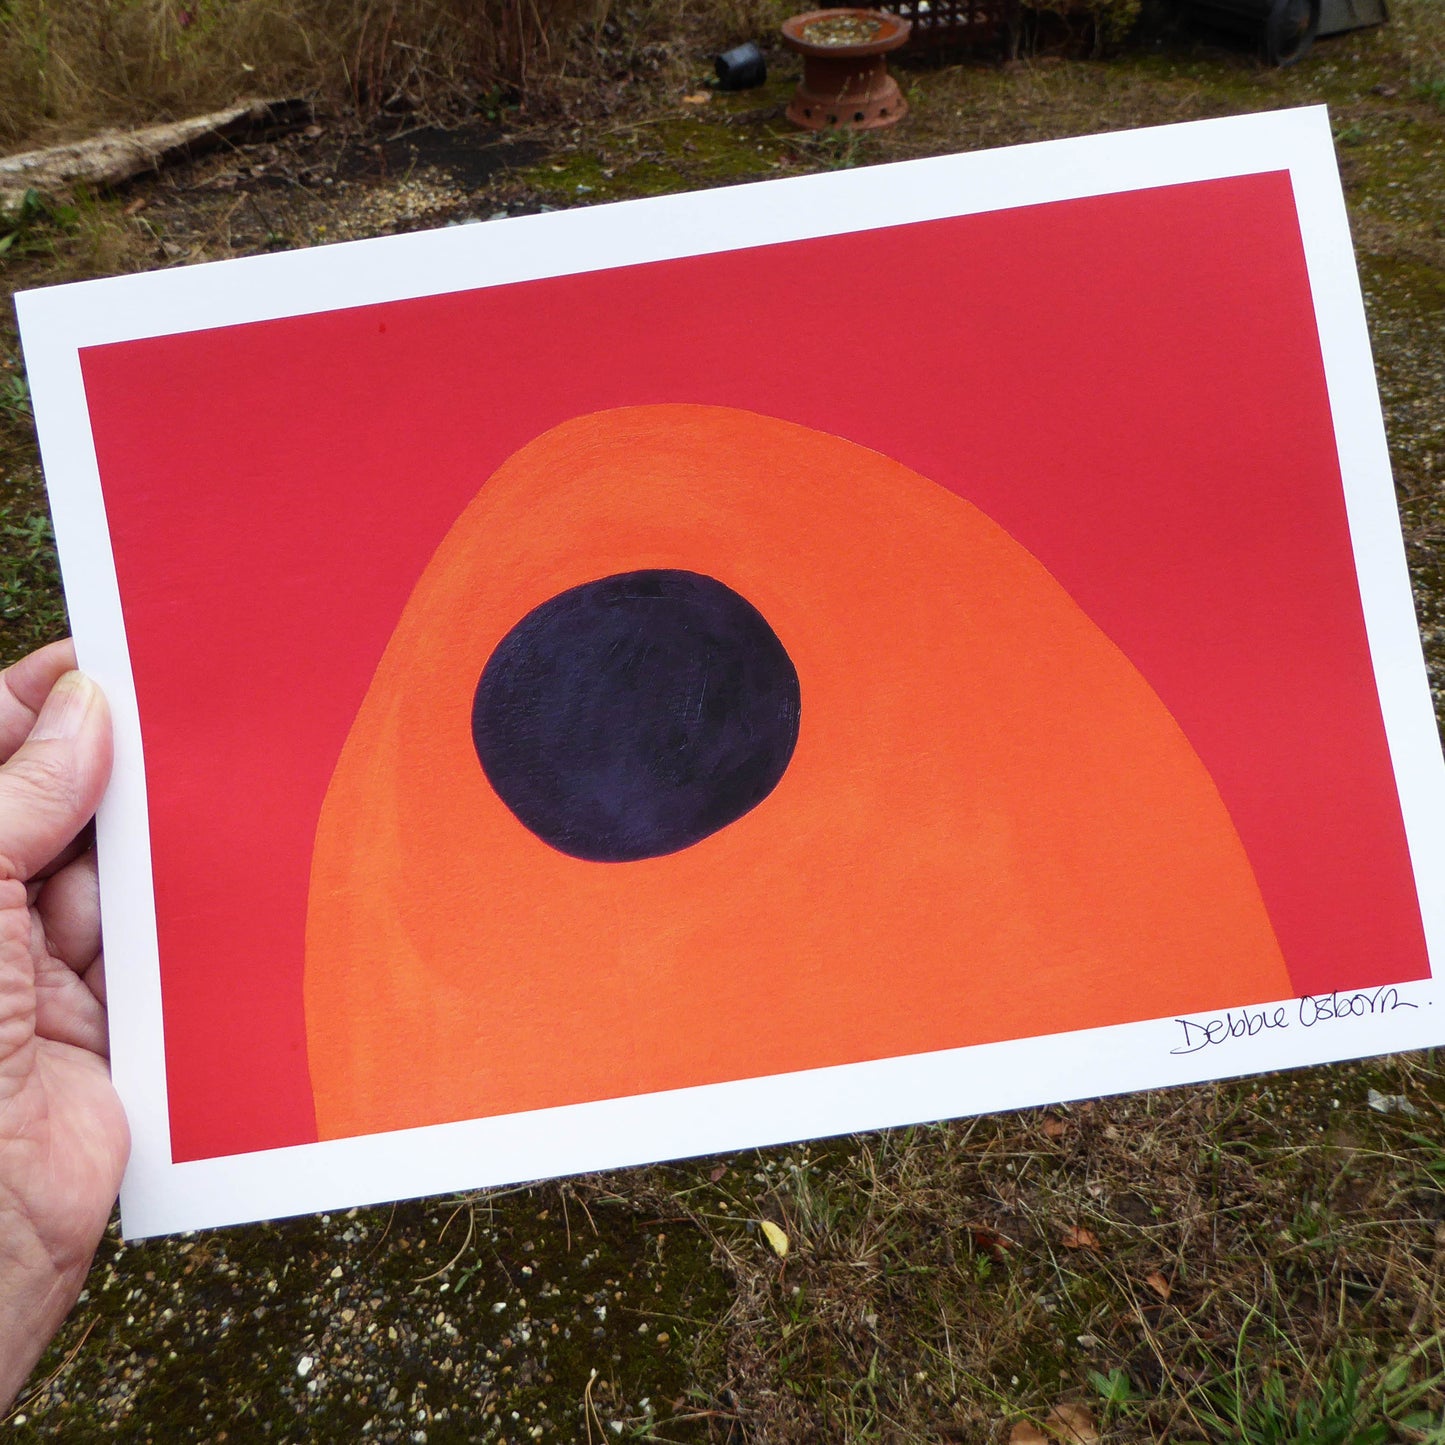 Digital Print of Untitled - Red, orange and black - Acrylic on cardboard